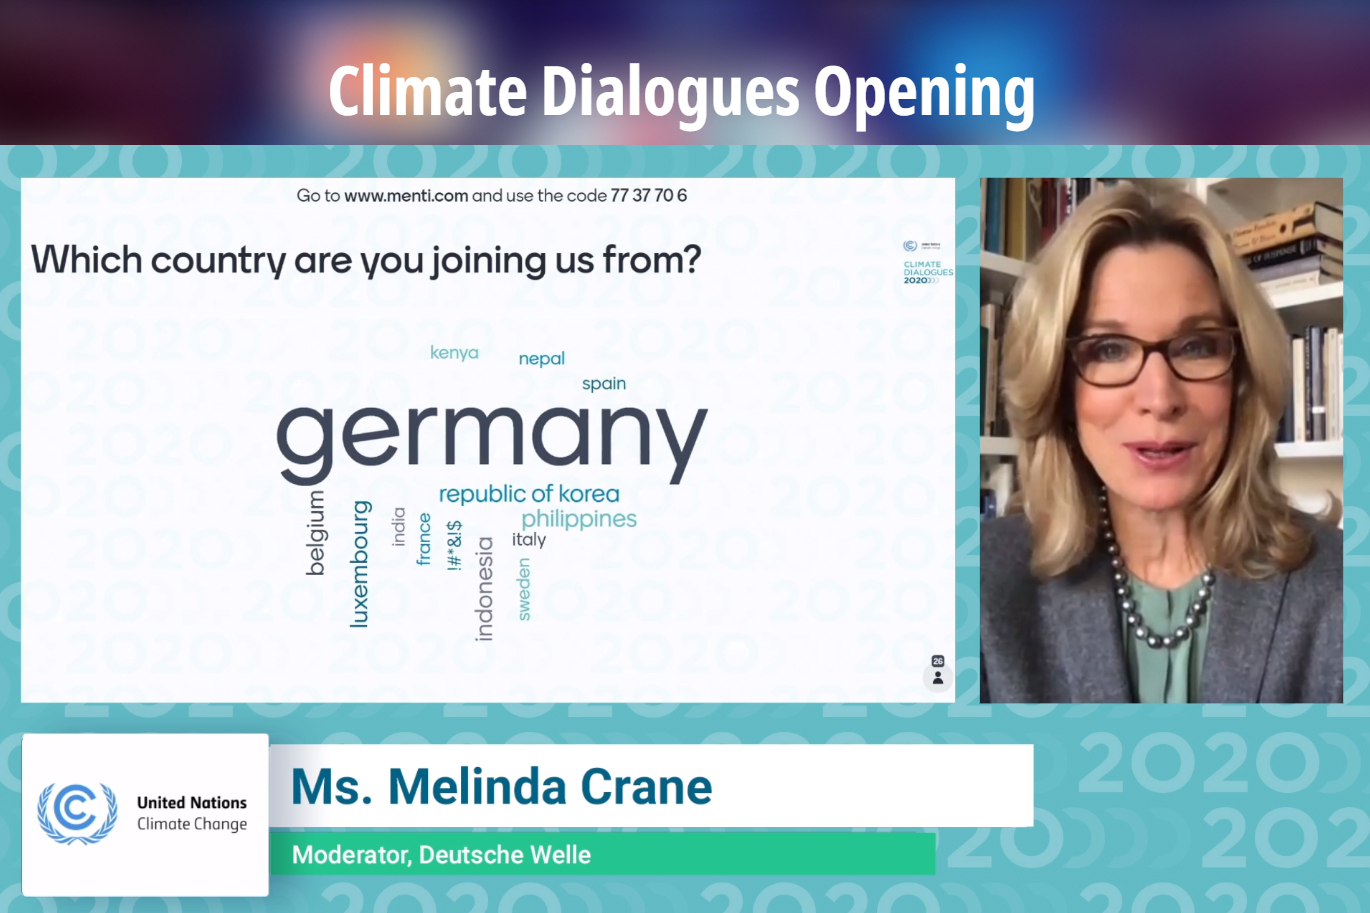 Moderator Melinda Crane, Deutsche Welle